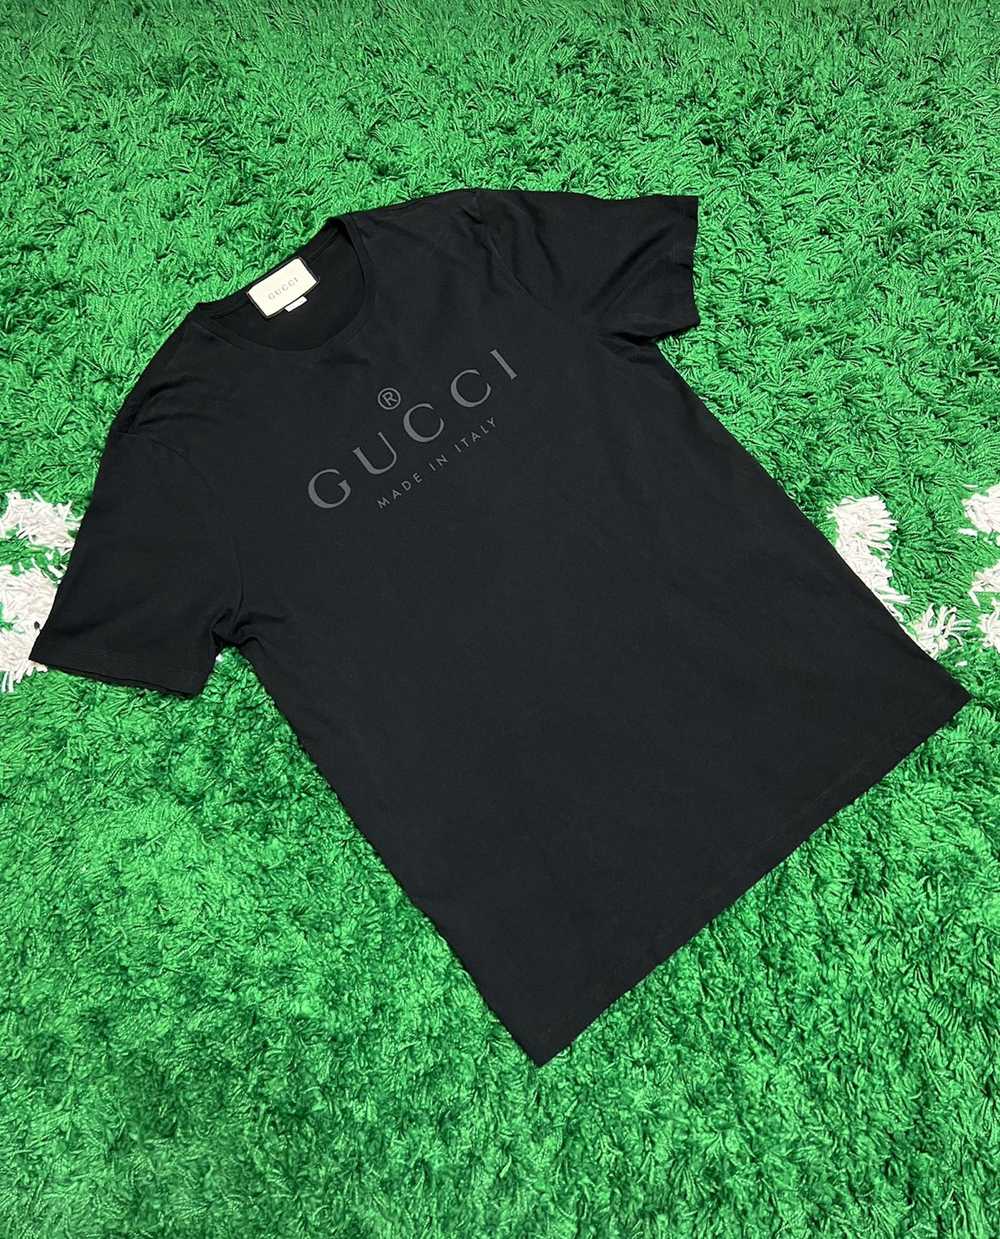 Gucci Black Monogram Red Green Curves Shirt - Tagotee